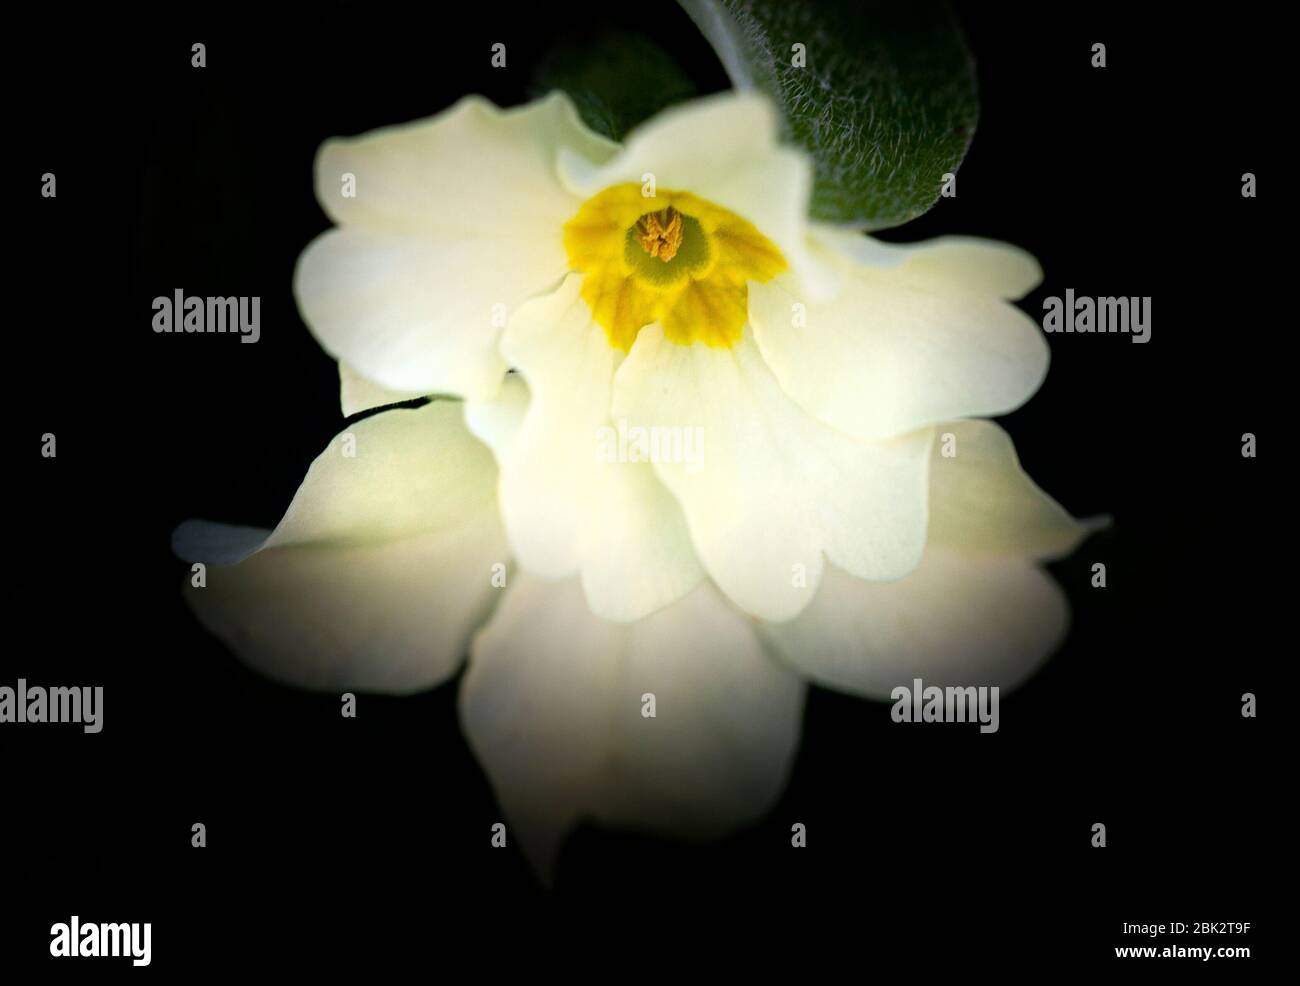 Wild primrose flowers (primula vulgaris) photographed in natural light outdoors. Stock Photo